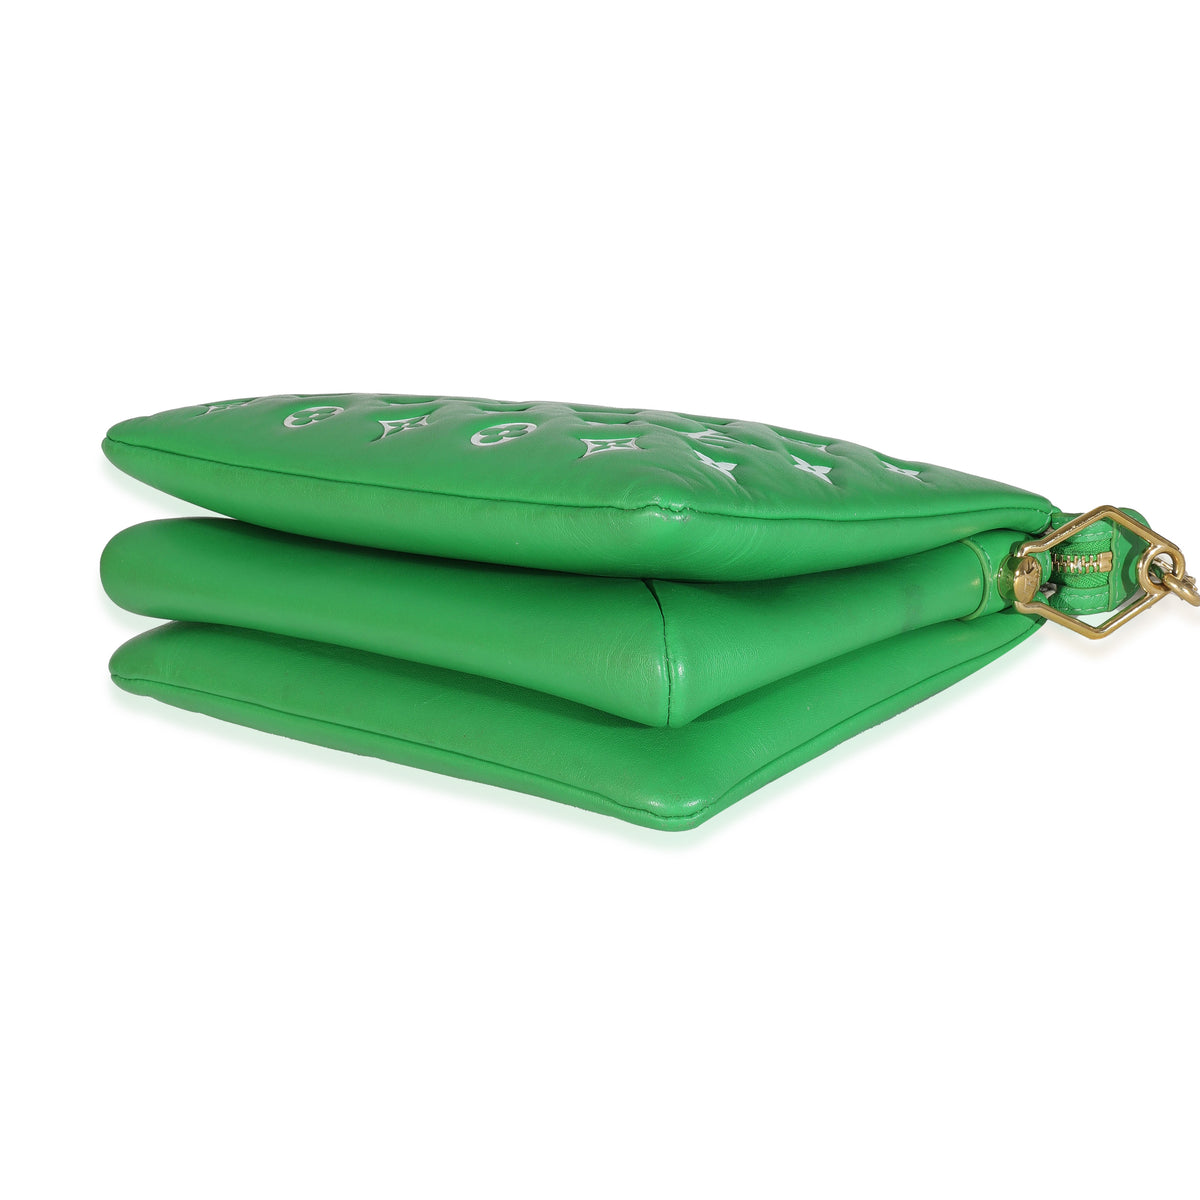 Louis Vuitton Coussin PM Motion Green Monogram Chain Shoulder Crossbody Bag